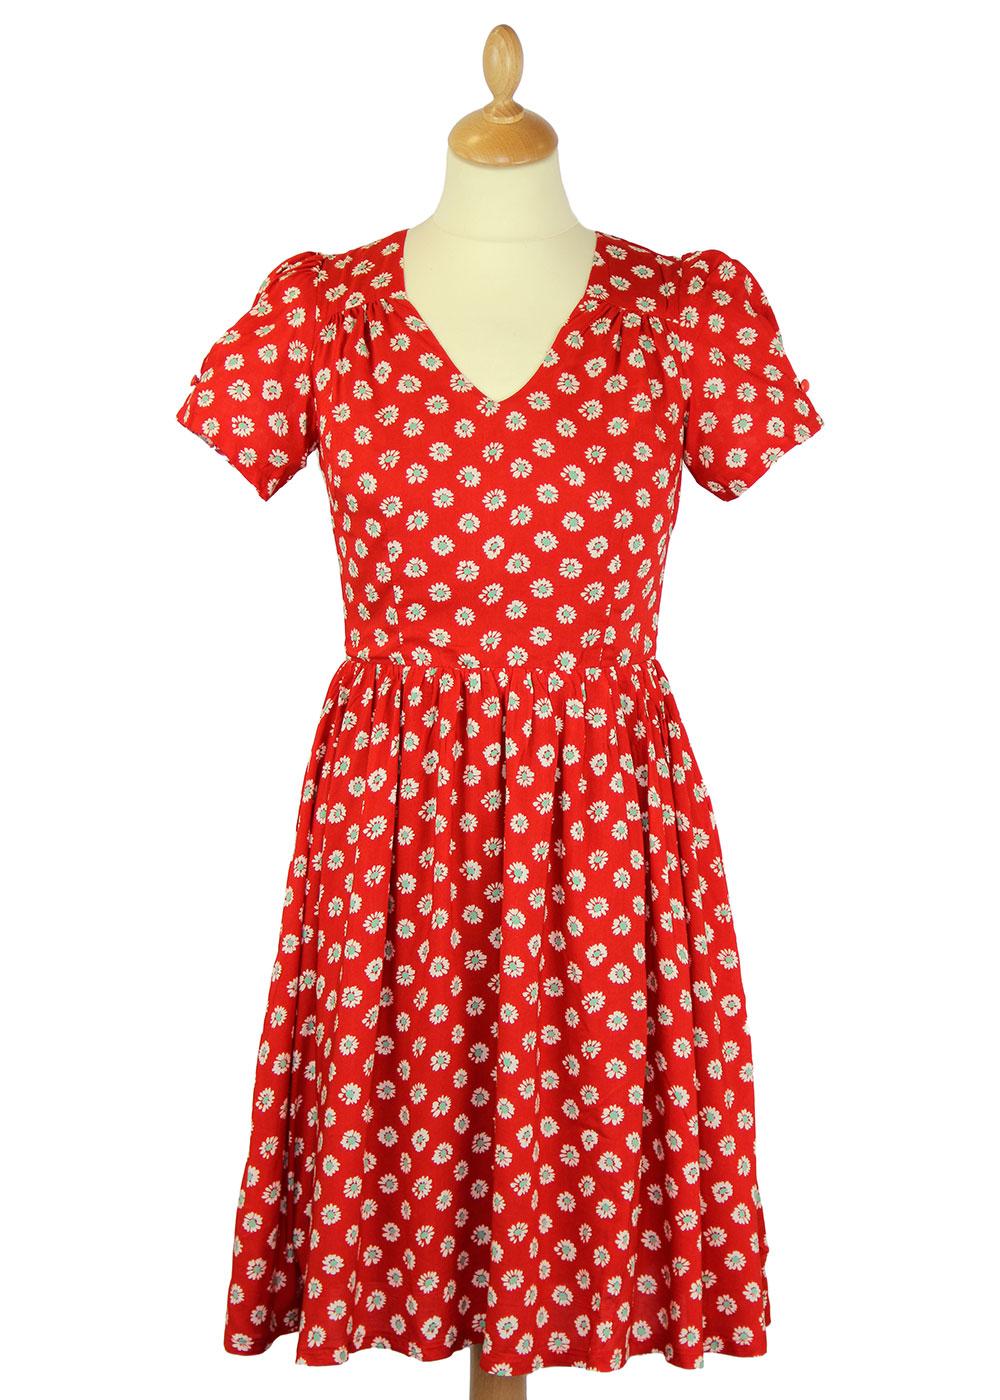 Fleur FRIDAY ON MY MIND Retro 50s Vintage Dress R